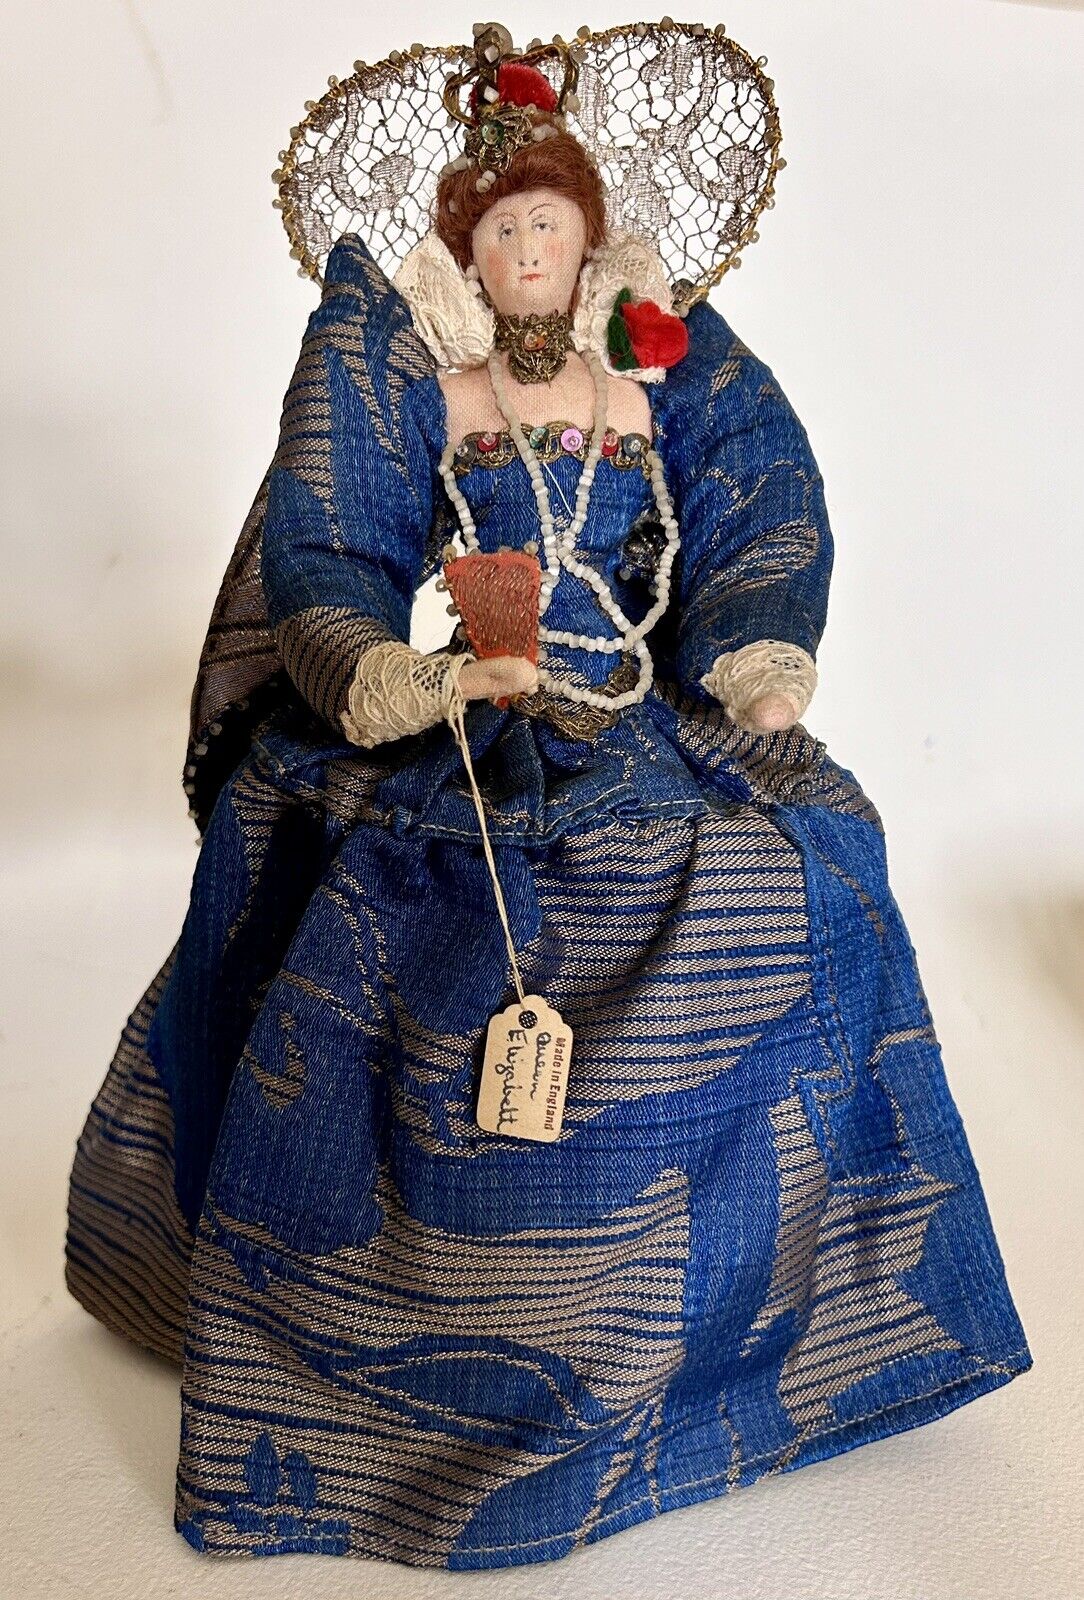 Vintage Liberty of London Queen Elizabeth Doll